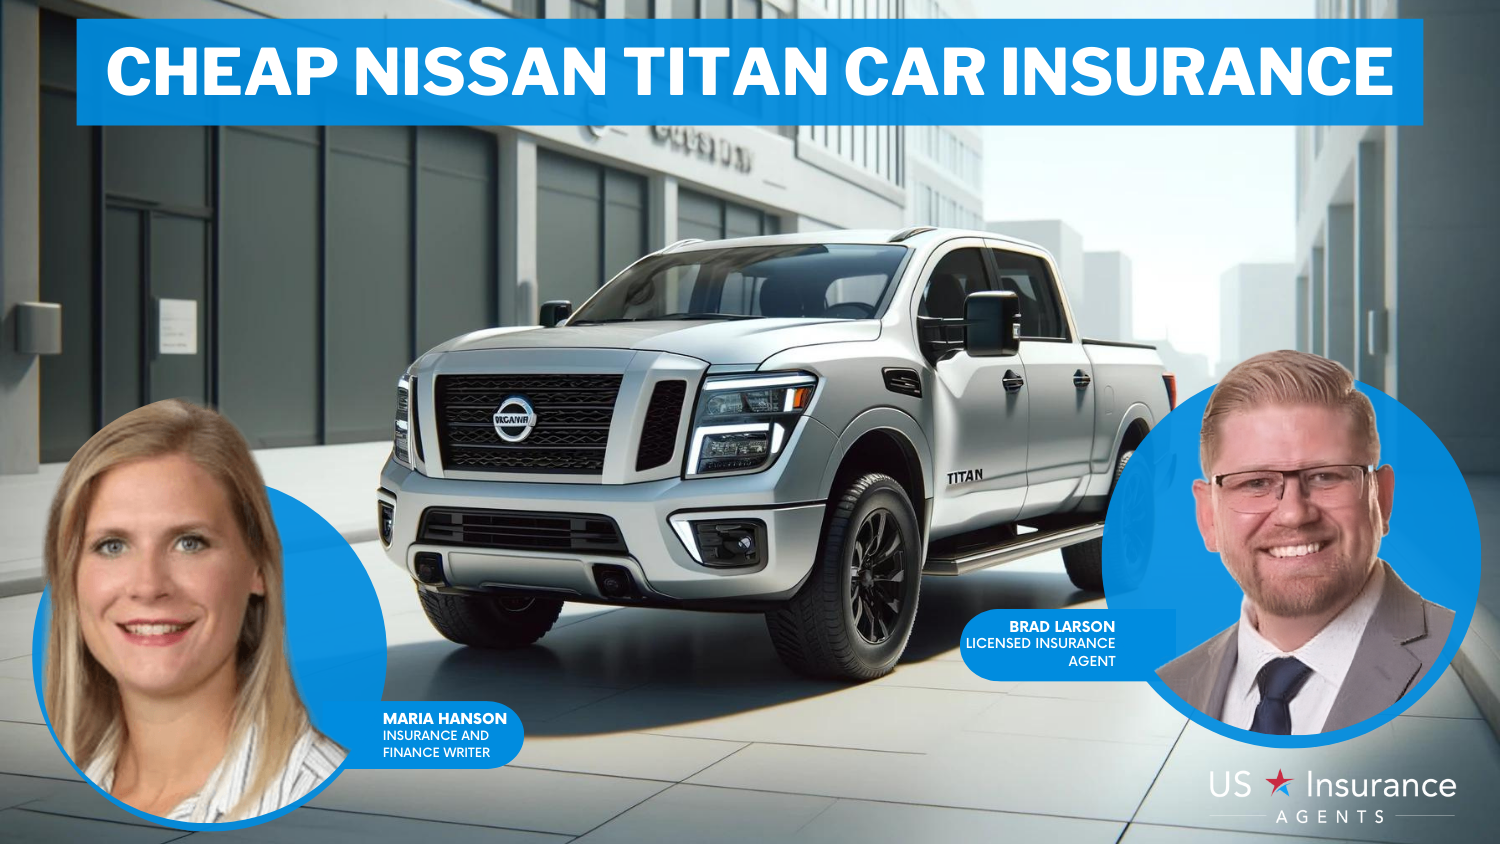 Cheap Nissan Titan Car Insurance: State Farm, Progressive, and American Family